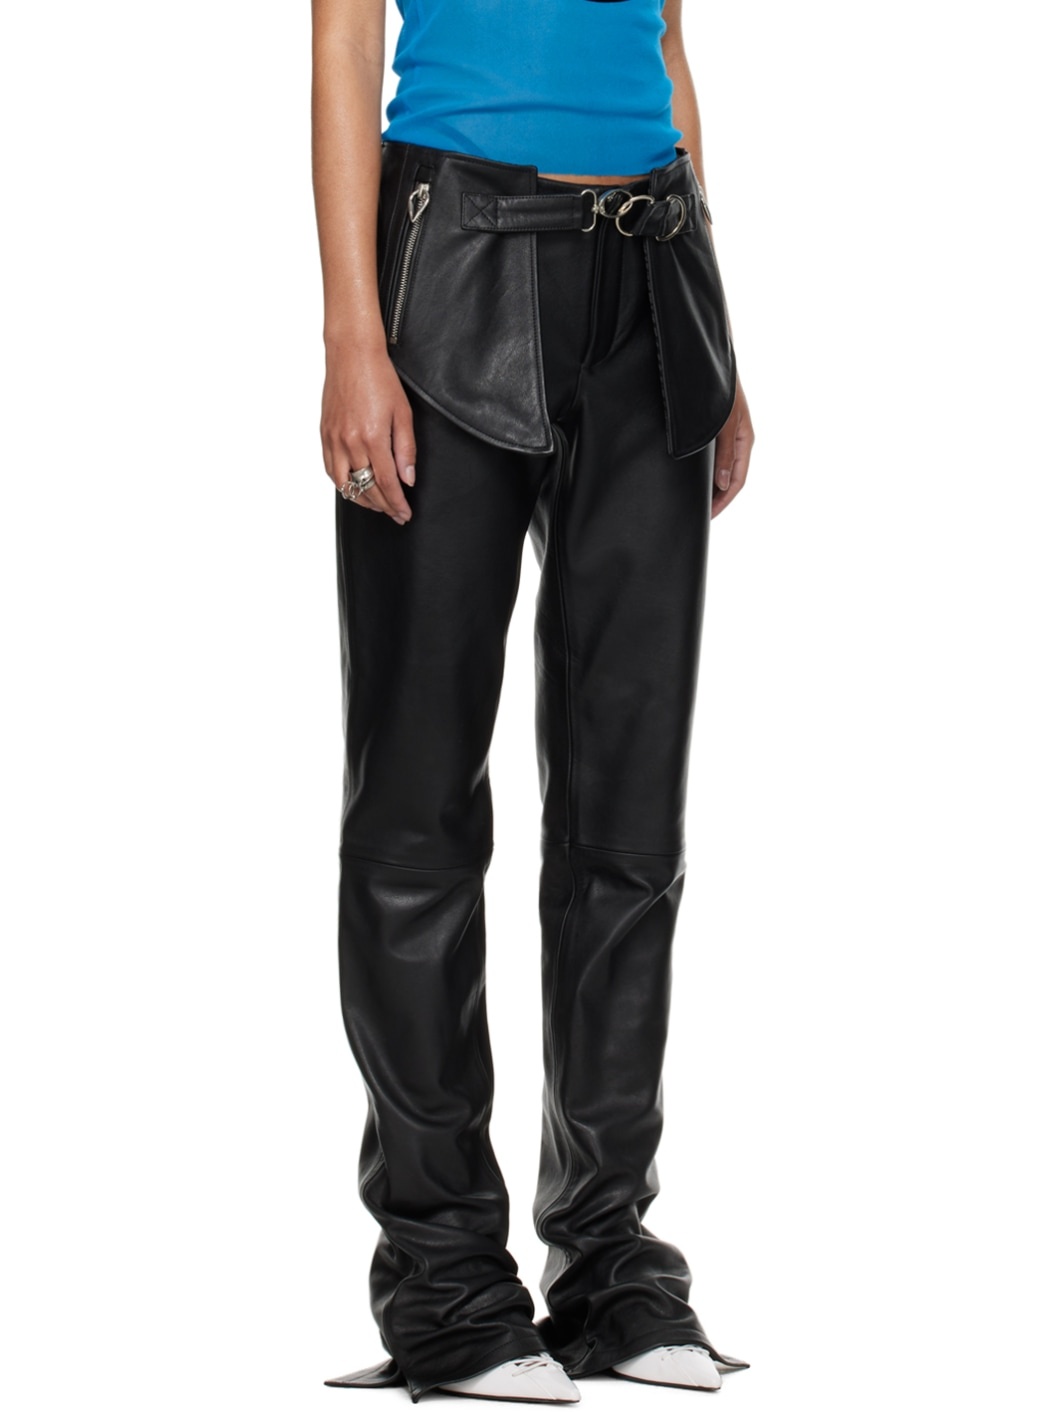 Black Shayne Oliver Edition Leather Pants - 2